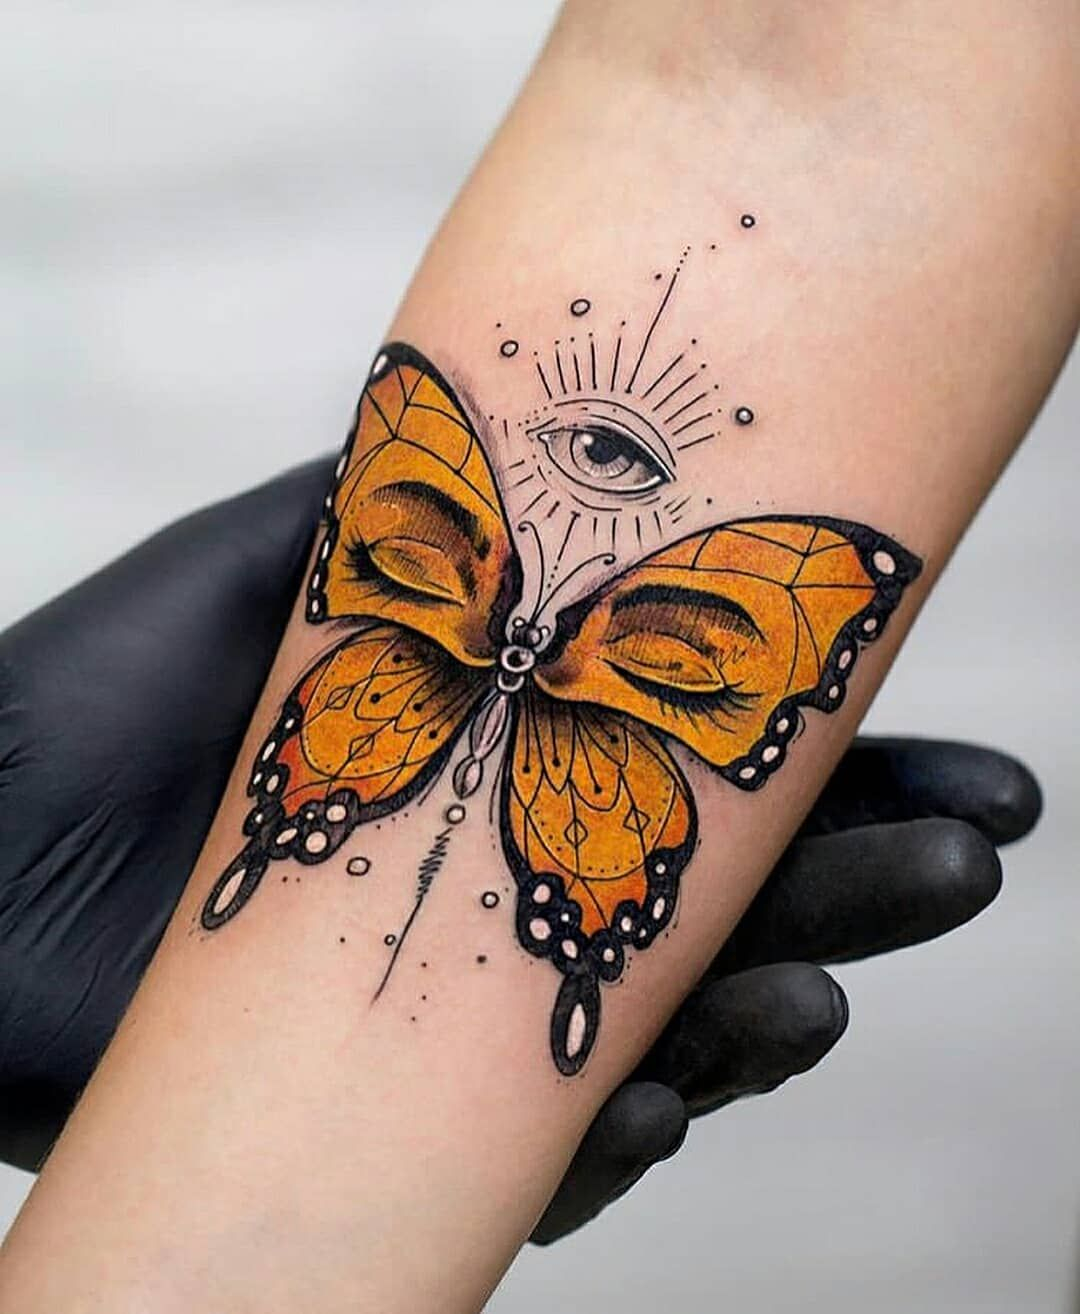 The Eyesfemale New Ink Tattoos Small Butterfly Tattoo Tattoo regarding dimensions 1080 X 1314